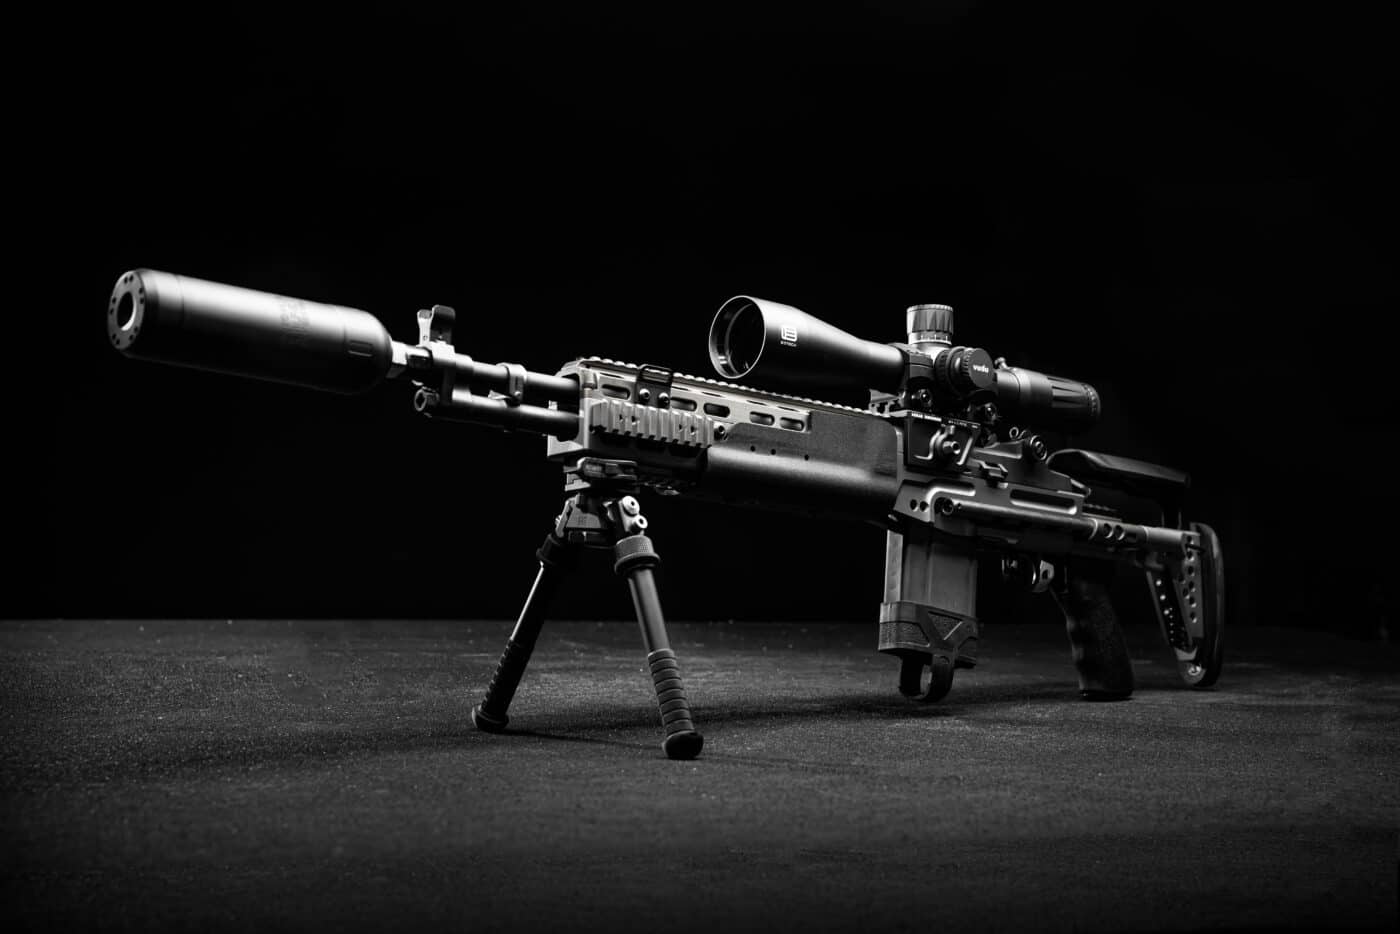 Orion-X suppressor on the M1A SOCOM rifle